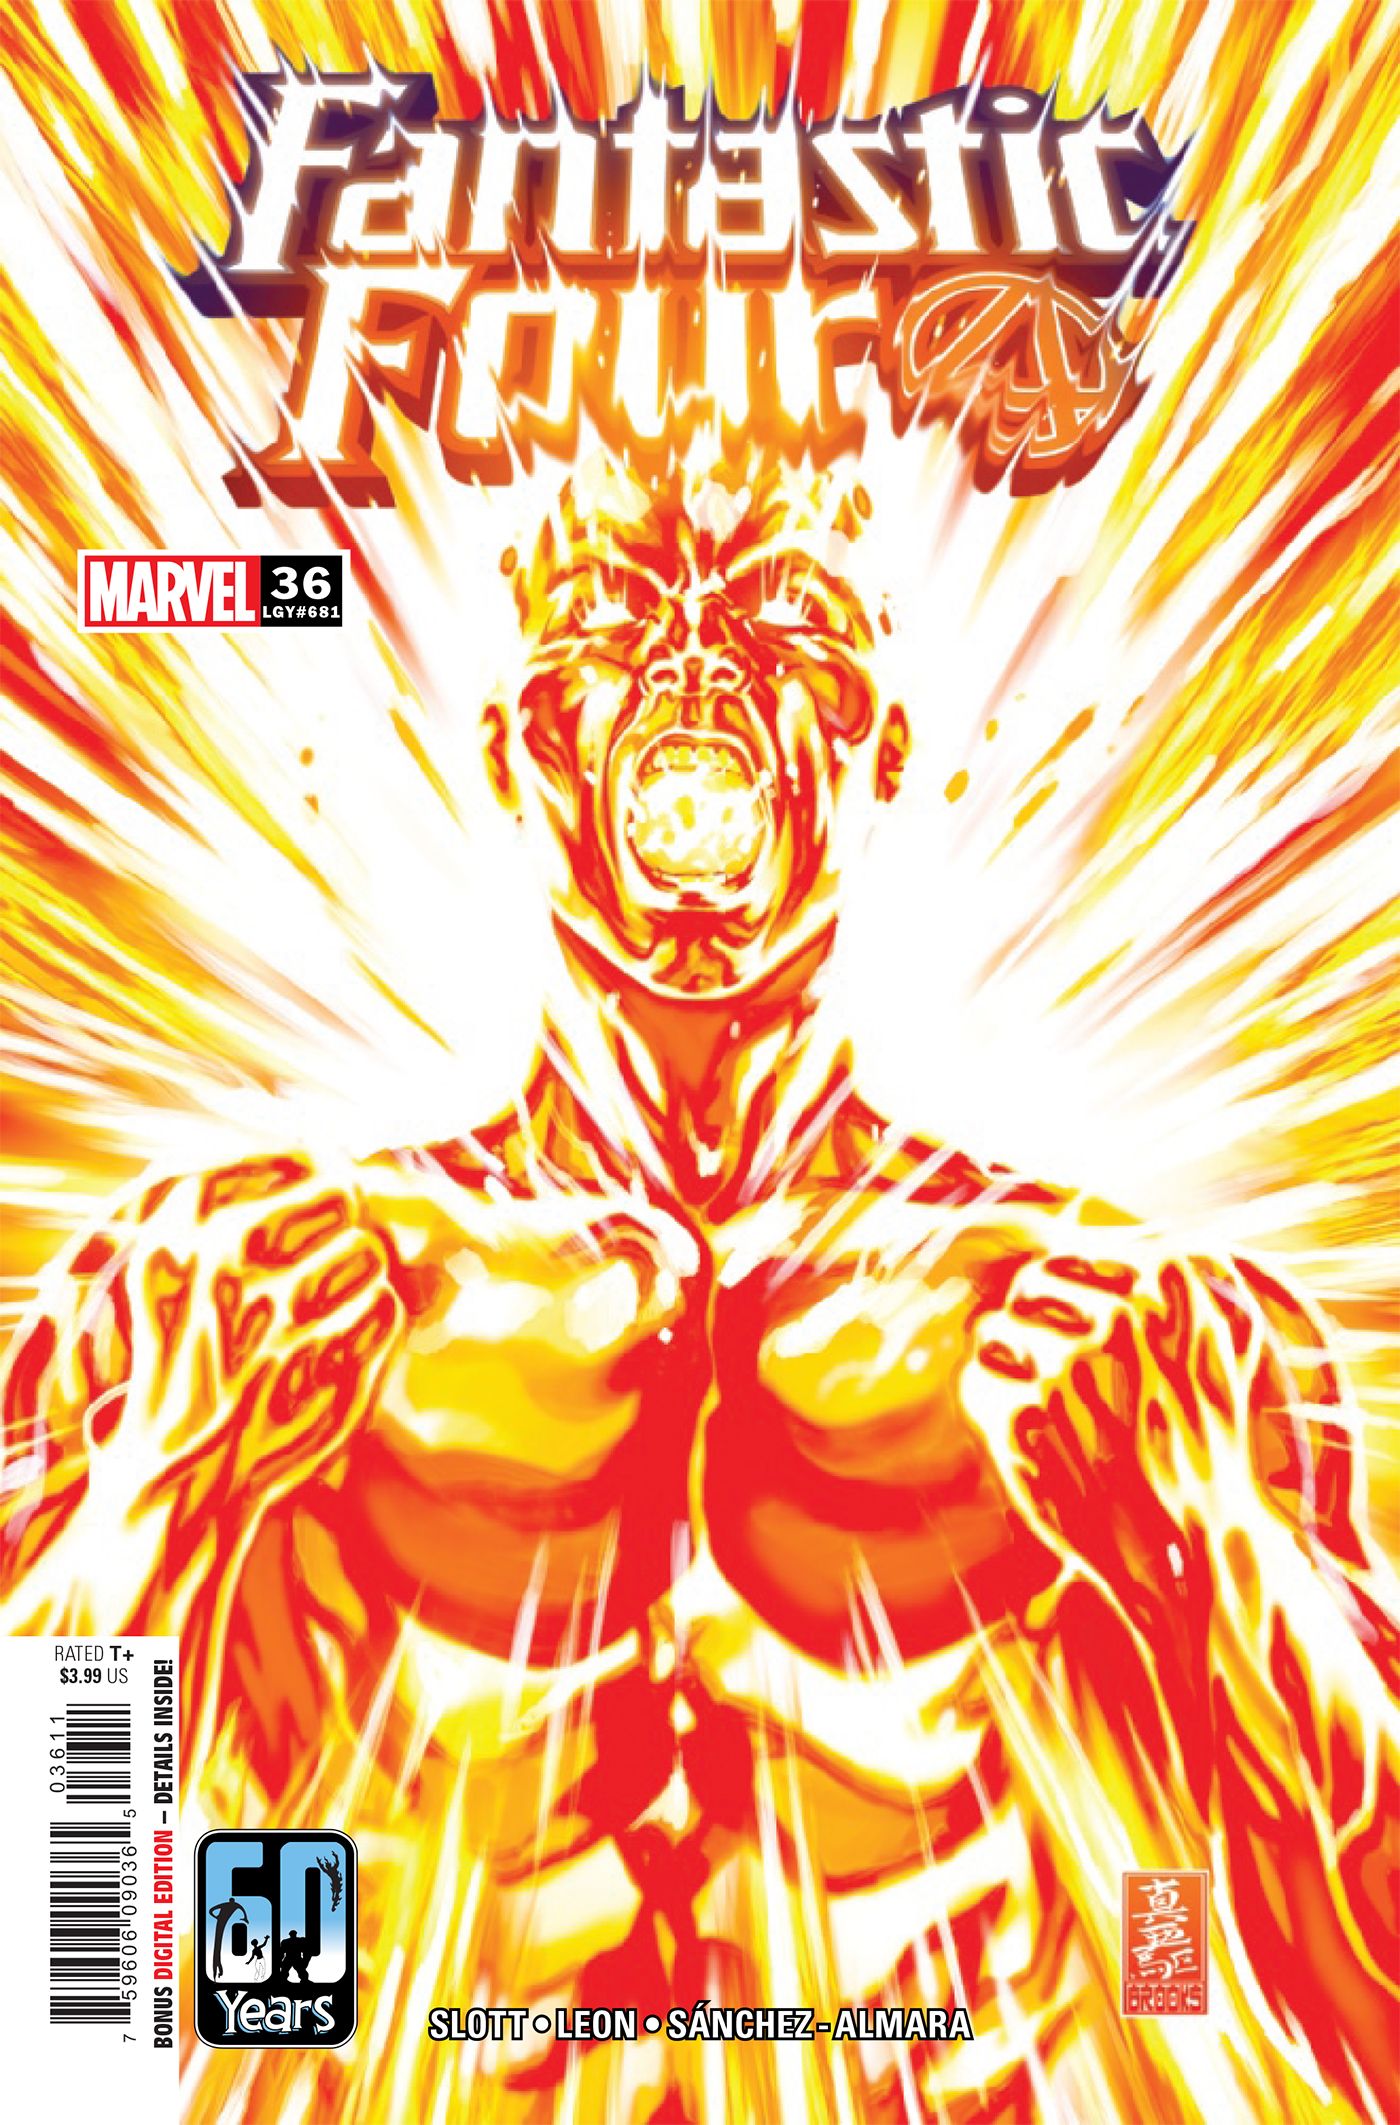 Fantastic Four #36 cover